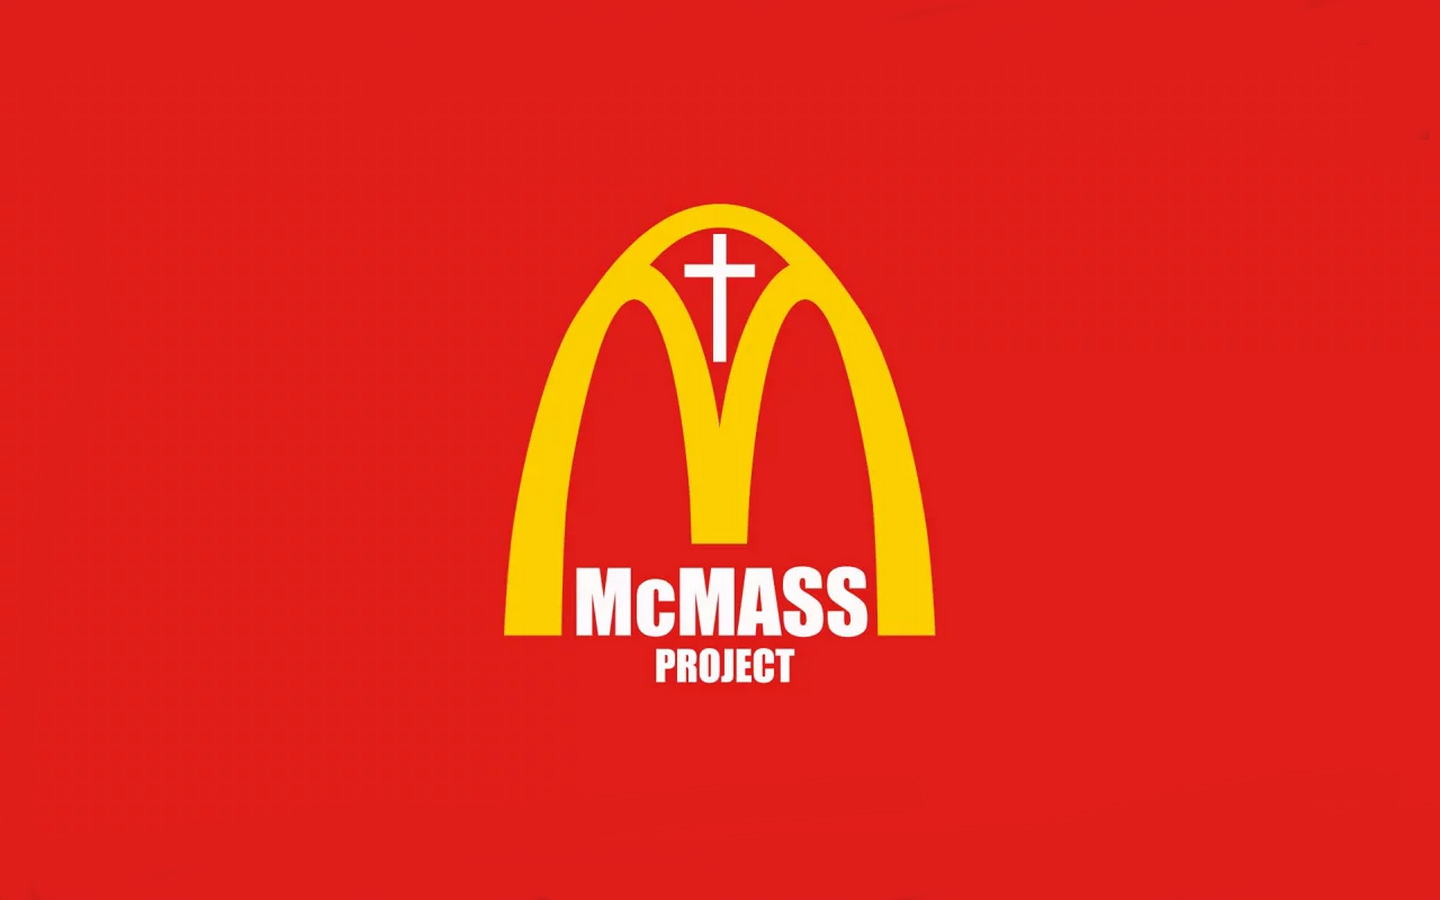 Mcmass church